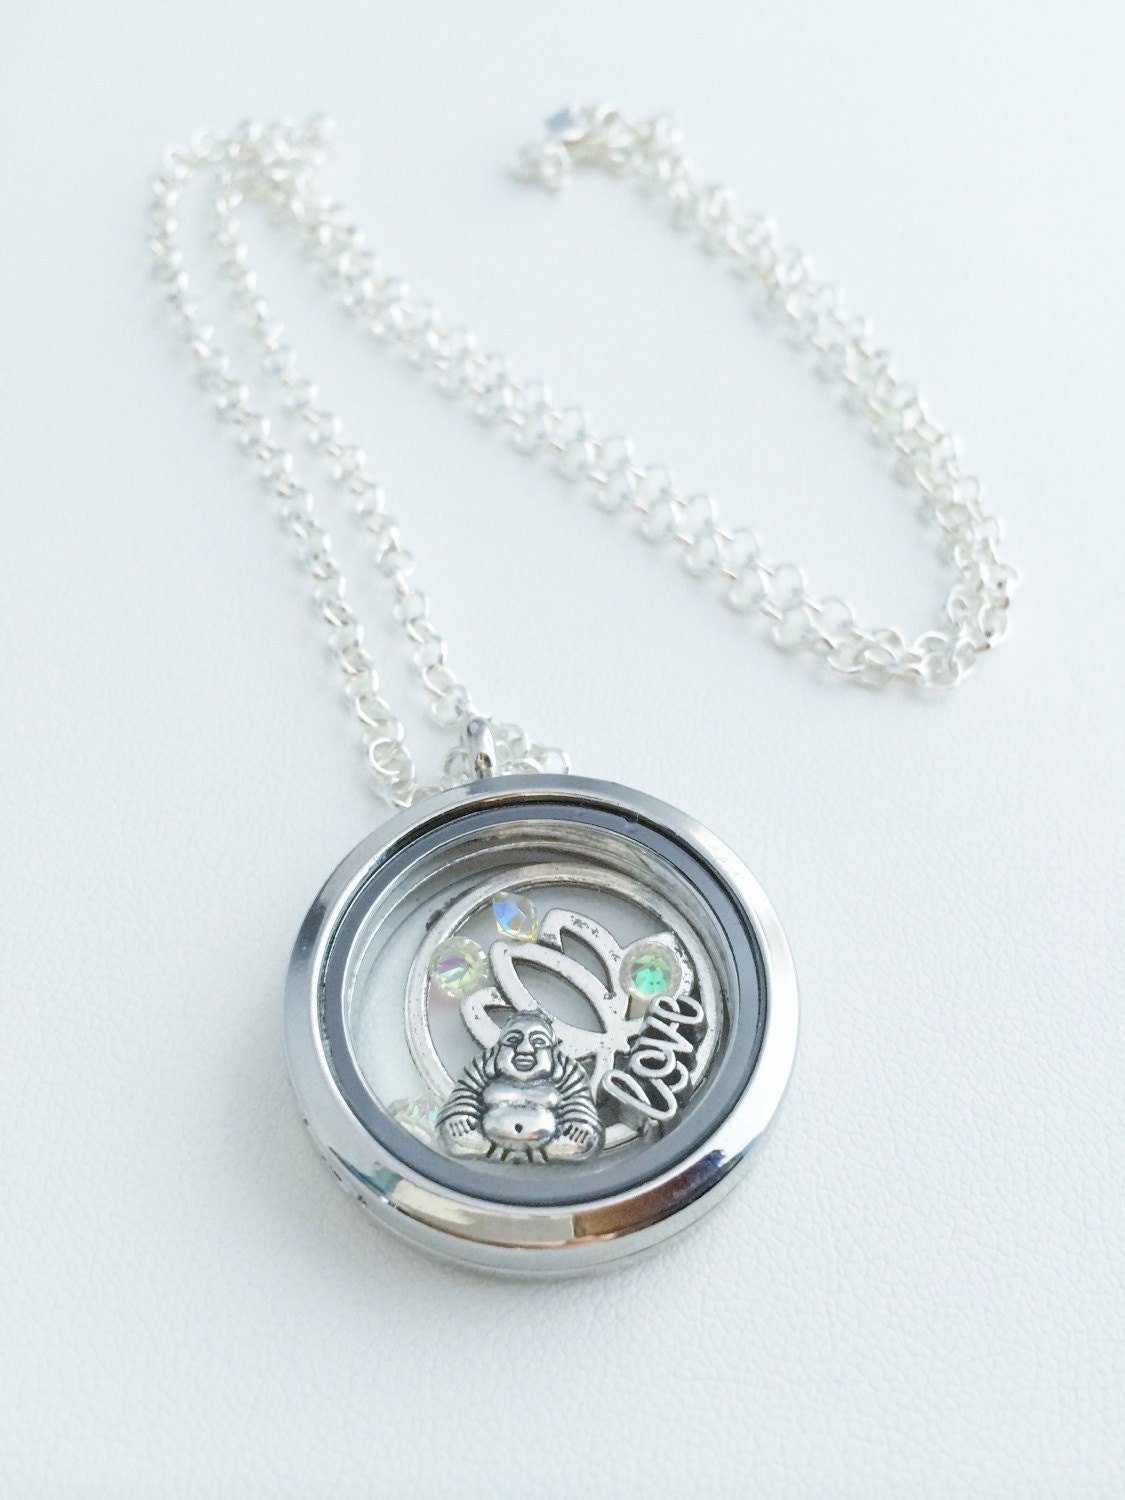 Namaste necklace lotus pendant memory locket by AlyChrisBoutique